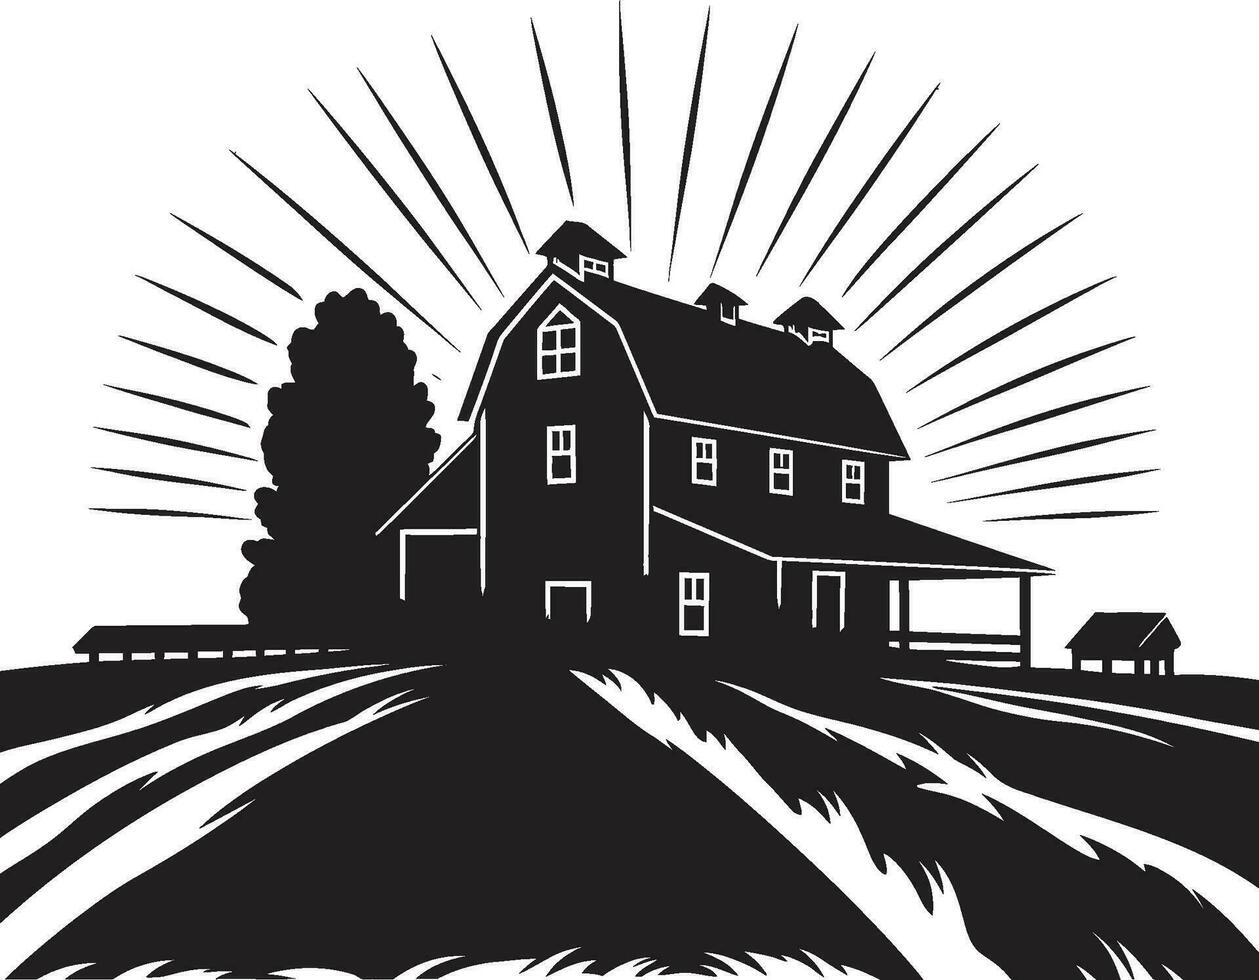 Harvest Haven Symbol Farmers House Vector Emblem Agrarian Abode Blueprint Farmhouse Design Vector Logo